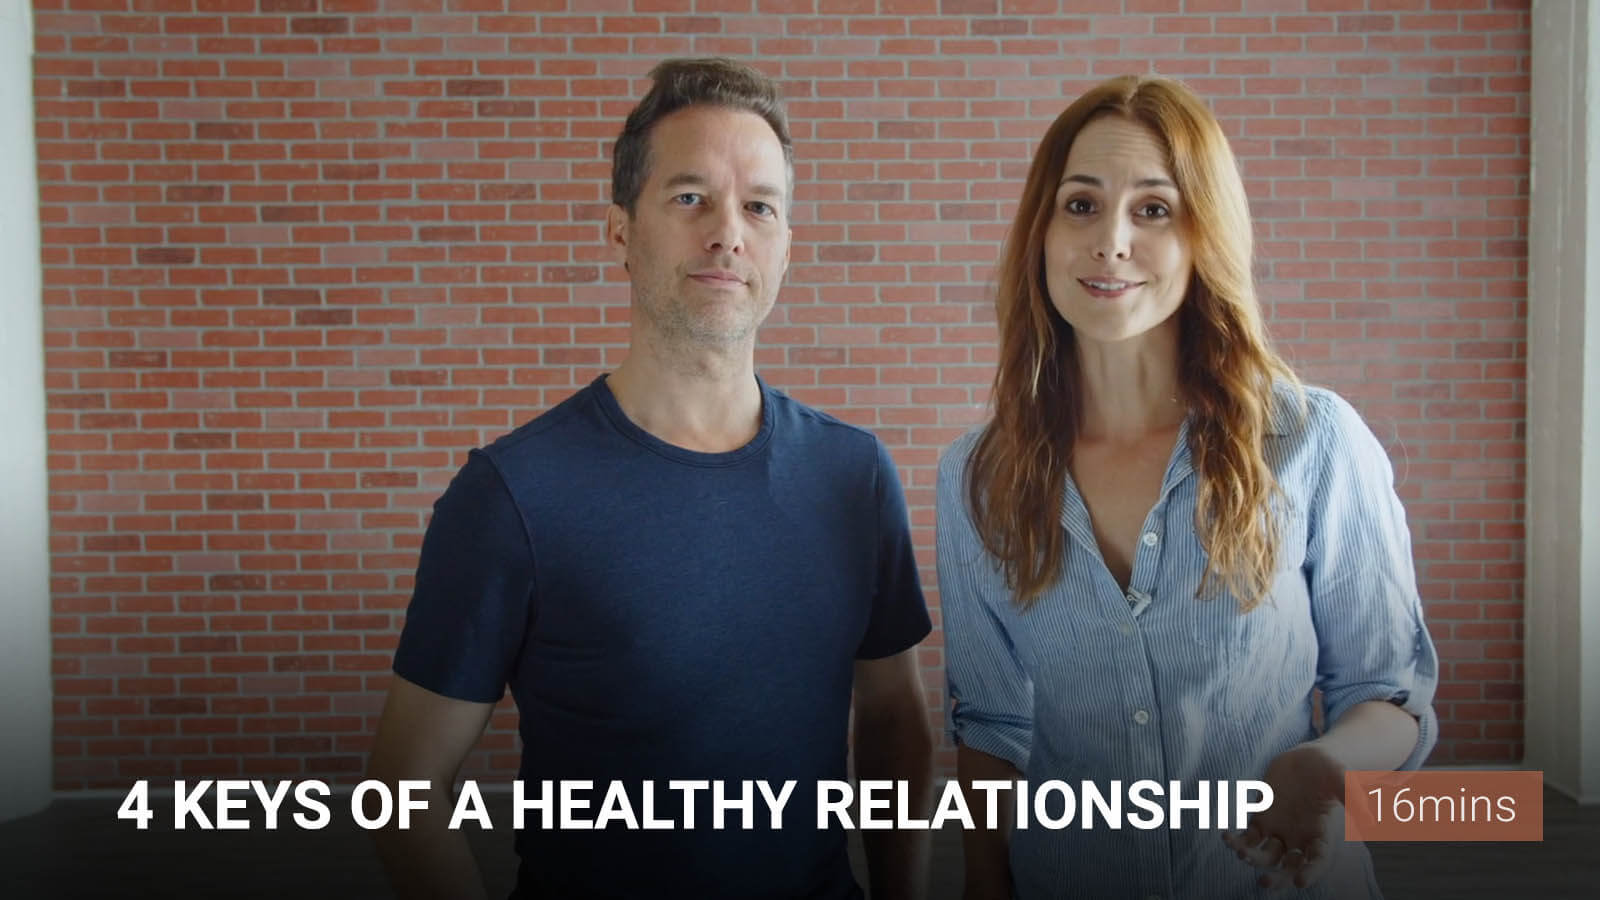 .The 4 Keys of a <b>Healthy Relationship</b>.